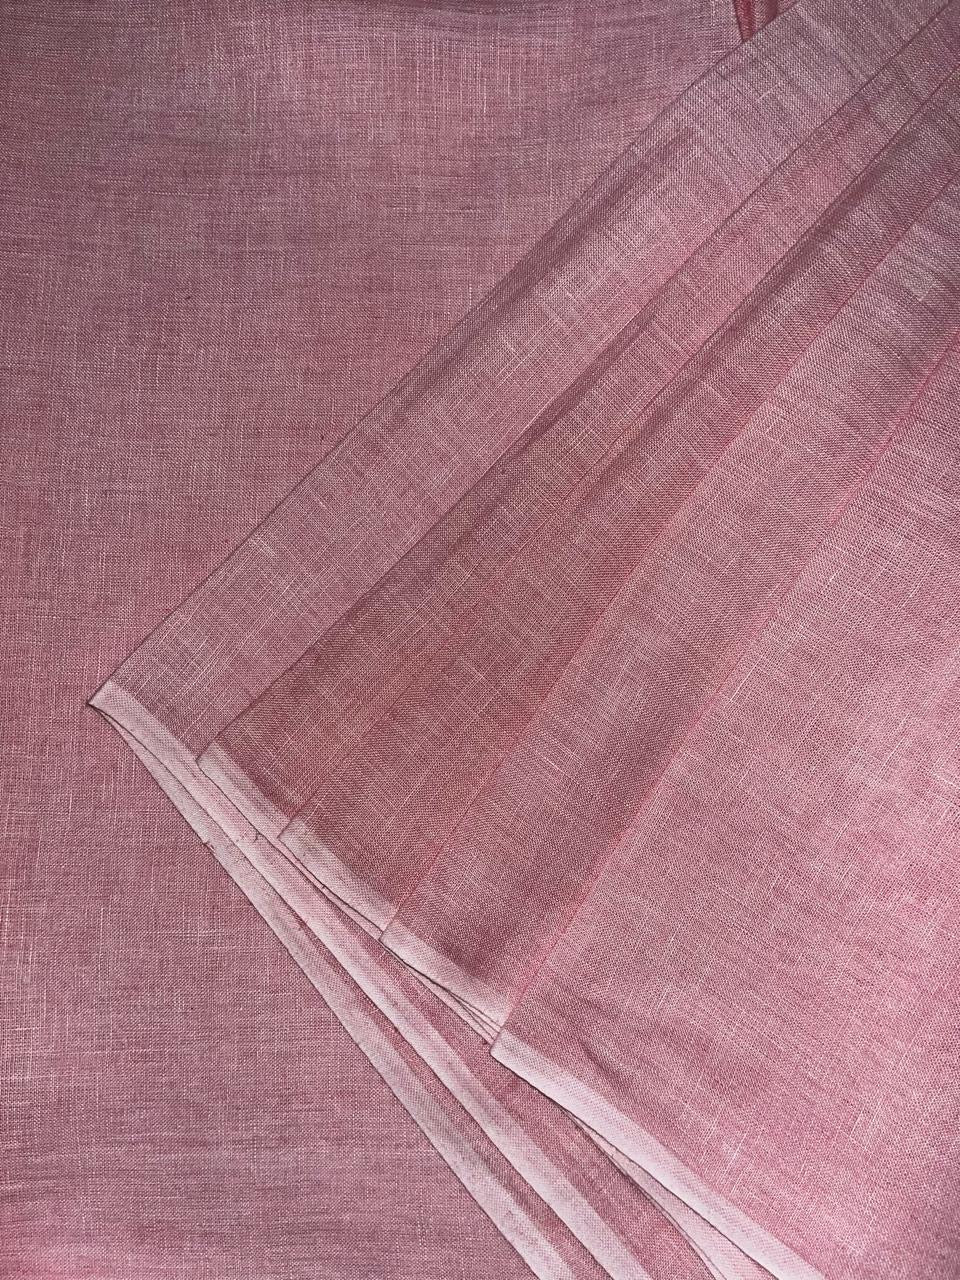 40 lea 58 inch 100% pure Handloom Linen Fabric -Salmon dusty Pink